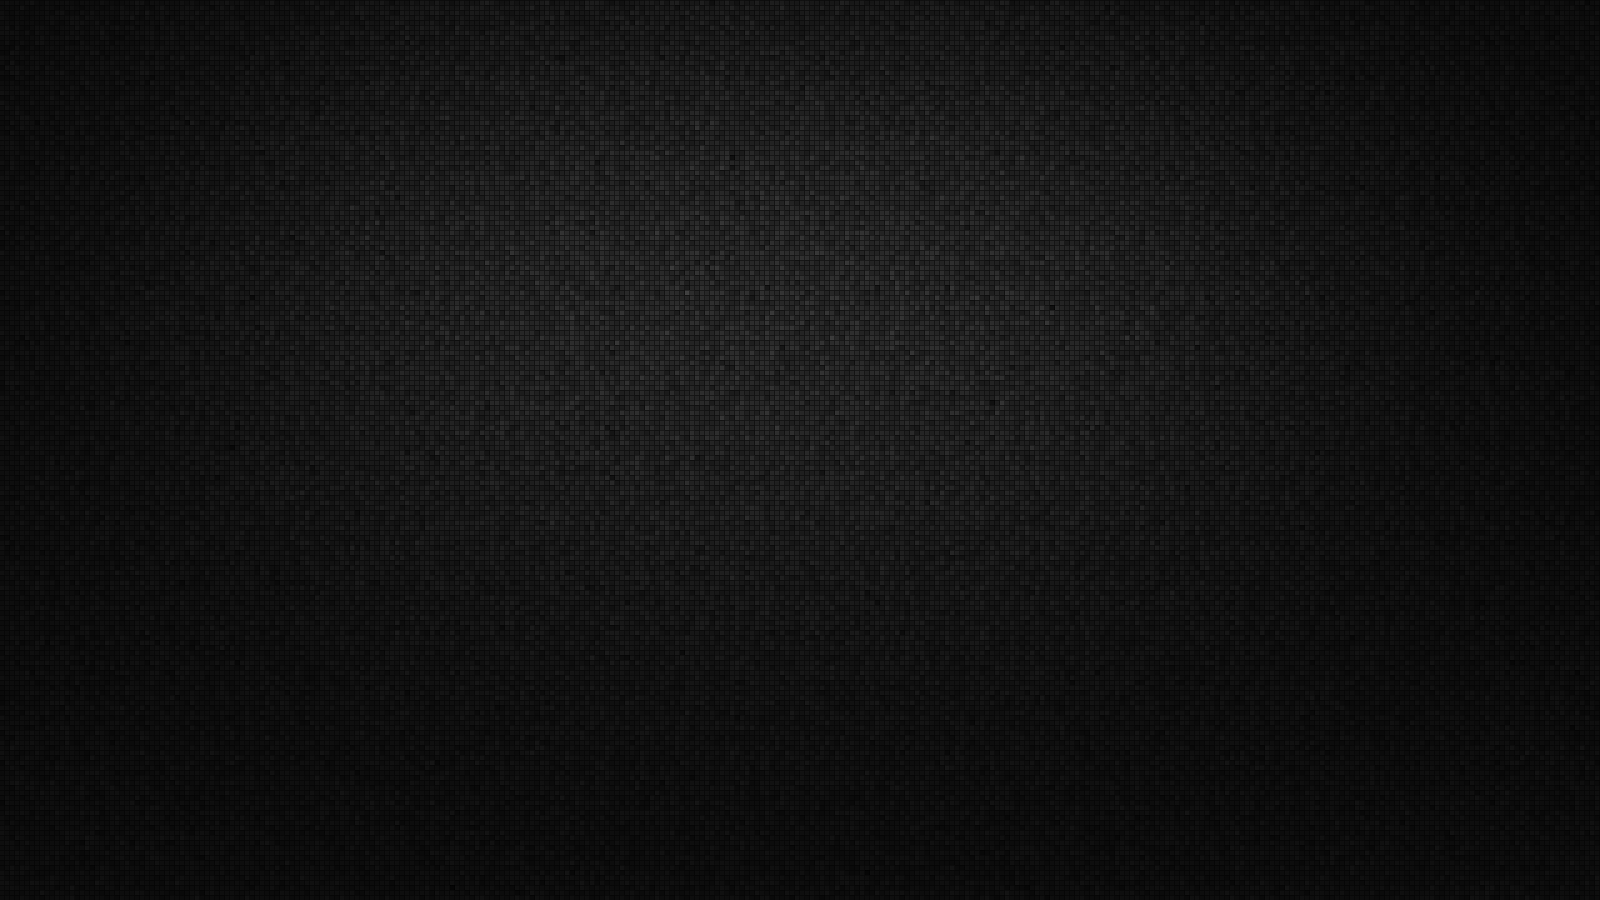 Pure Dark Black HD Desktop Wallpapers Full Size-1024x768 | Wallpapers ...